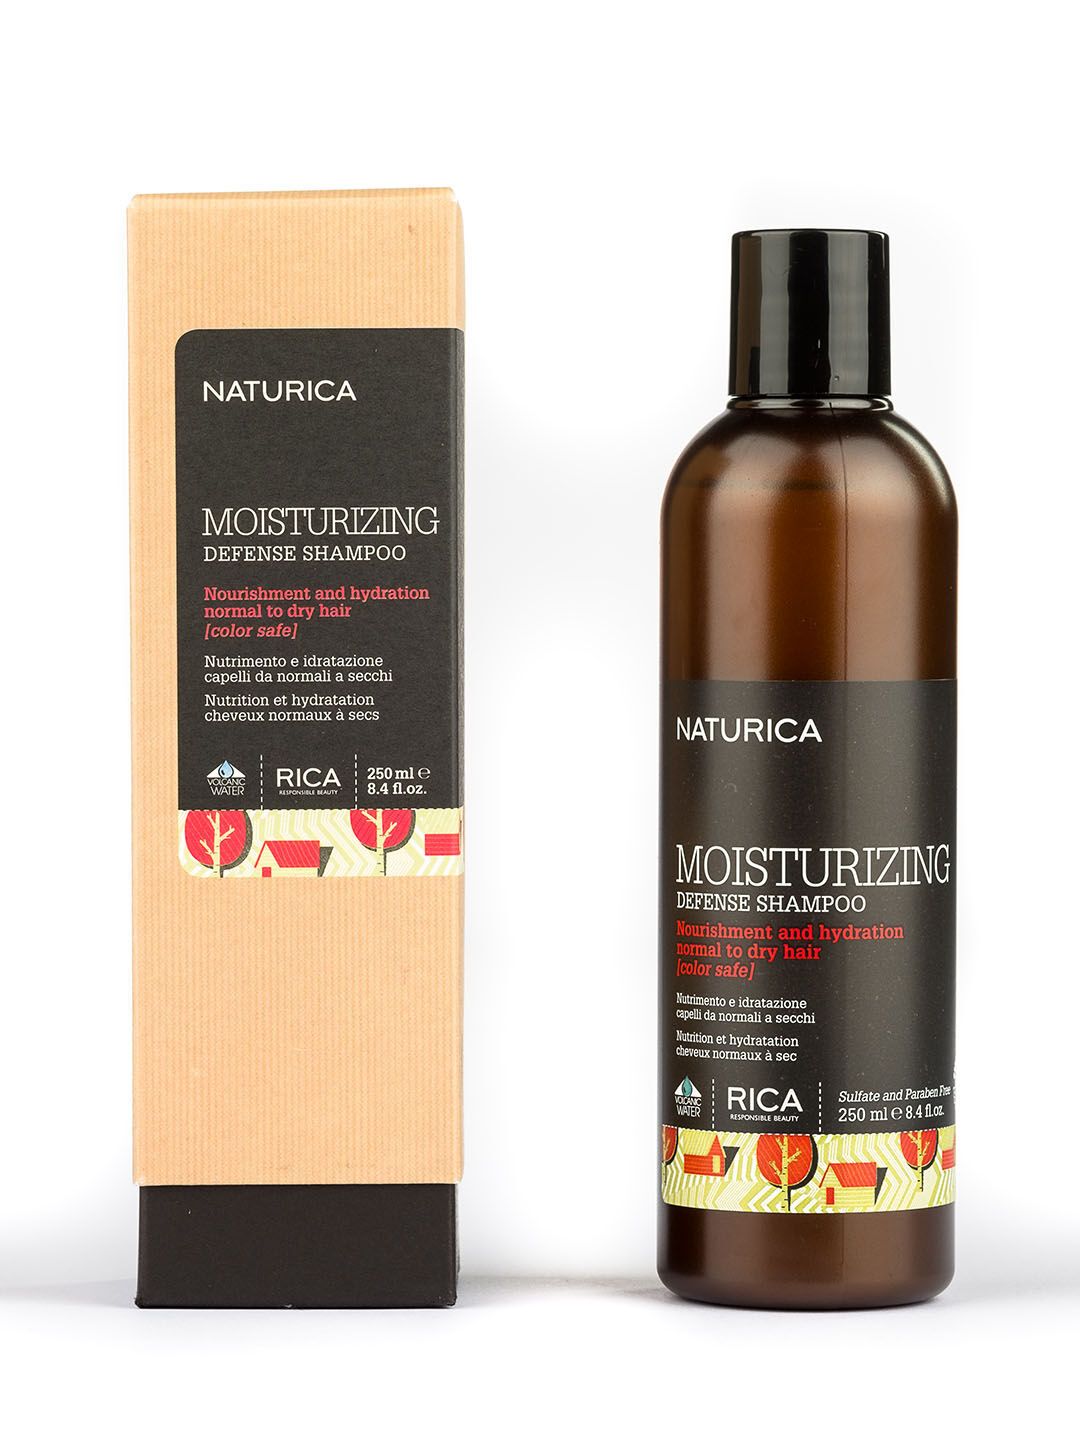 Naturica Moisturising Defense Shampoo by Rica 250ml Price in India